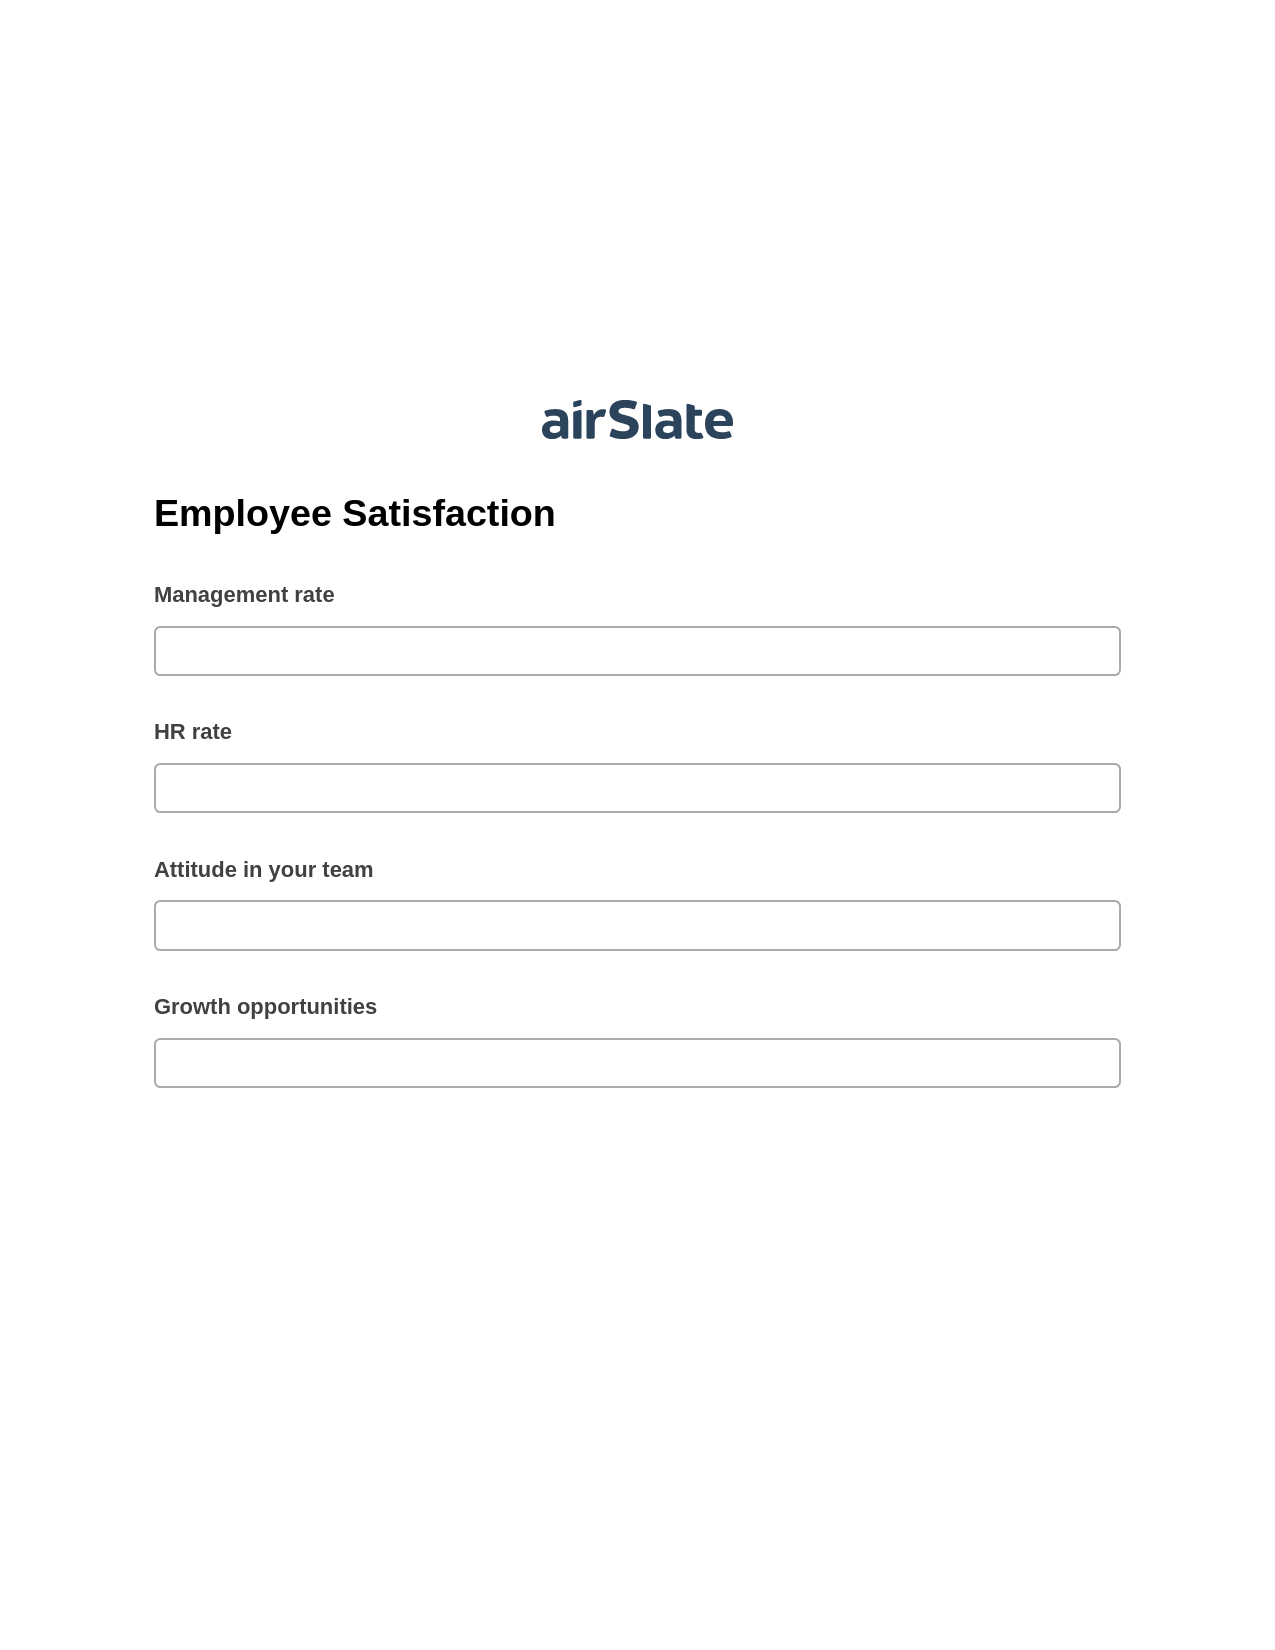 Multirole Employee Satisfaction Pre-fill from CSV File Bot, Remove Slate Bot, OneDrive Bot